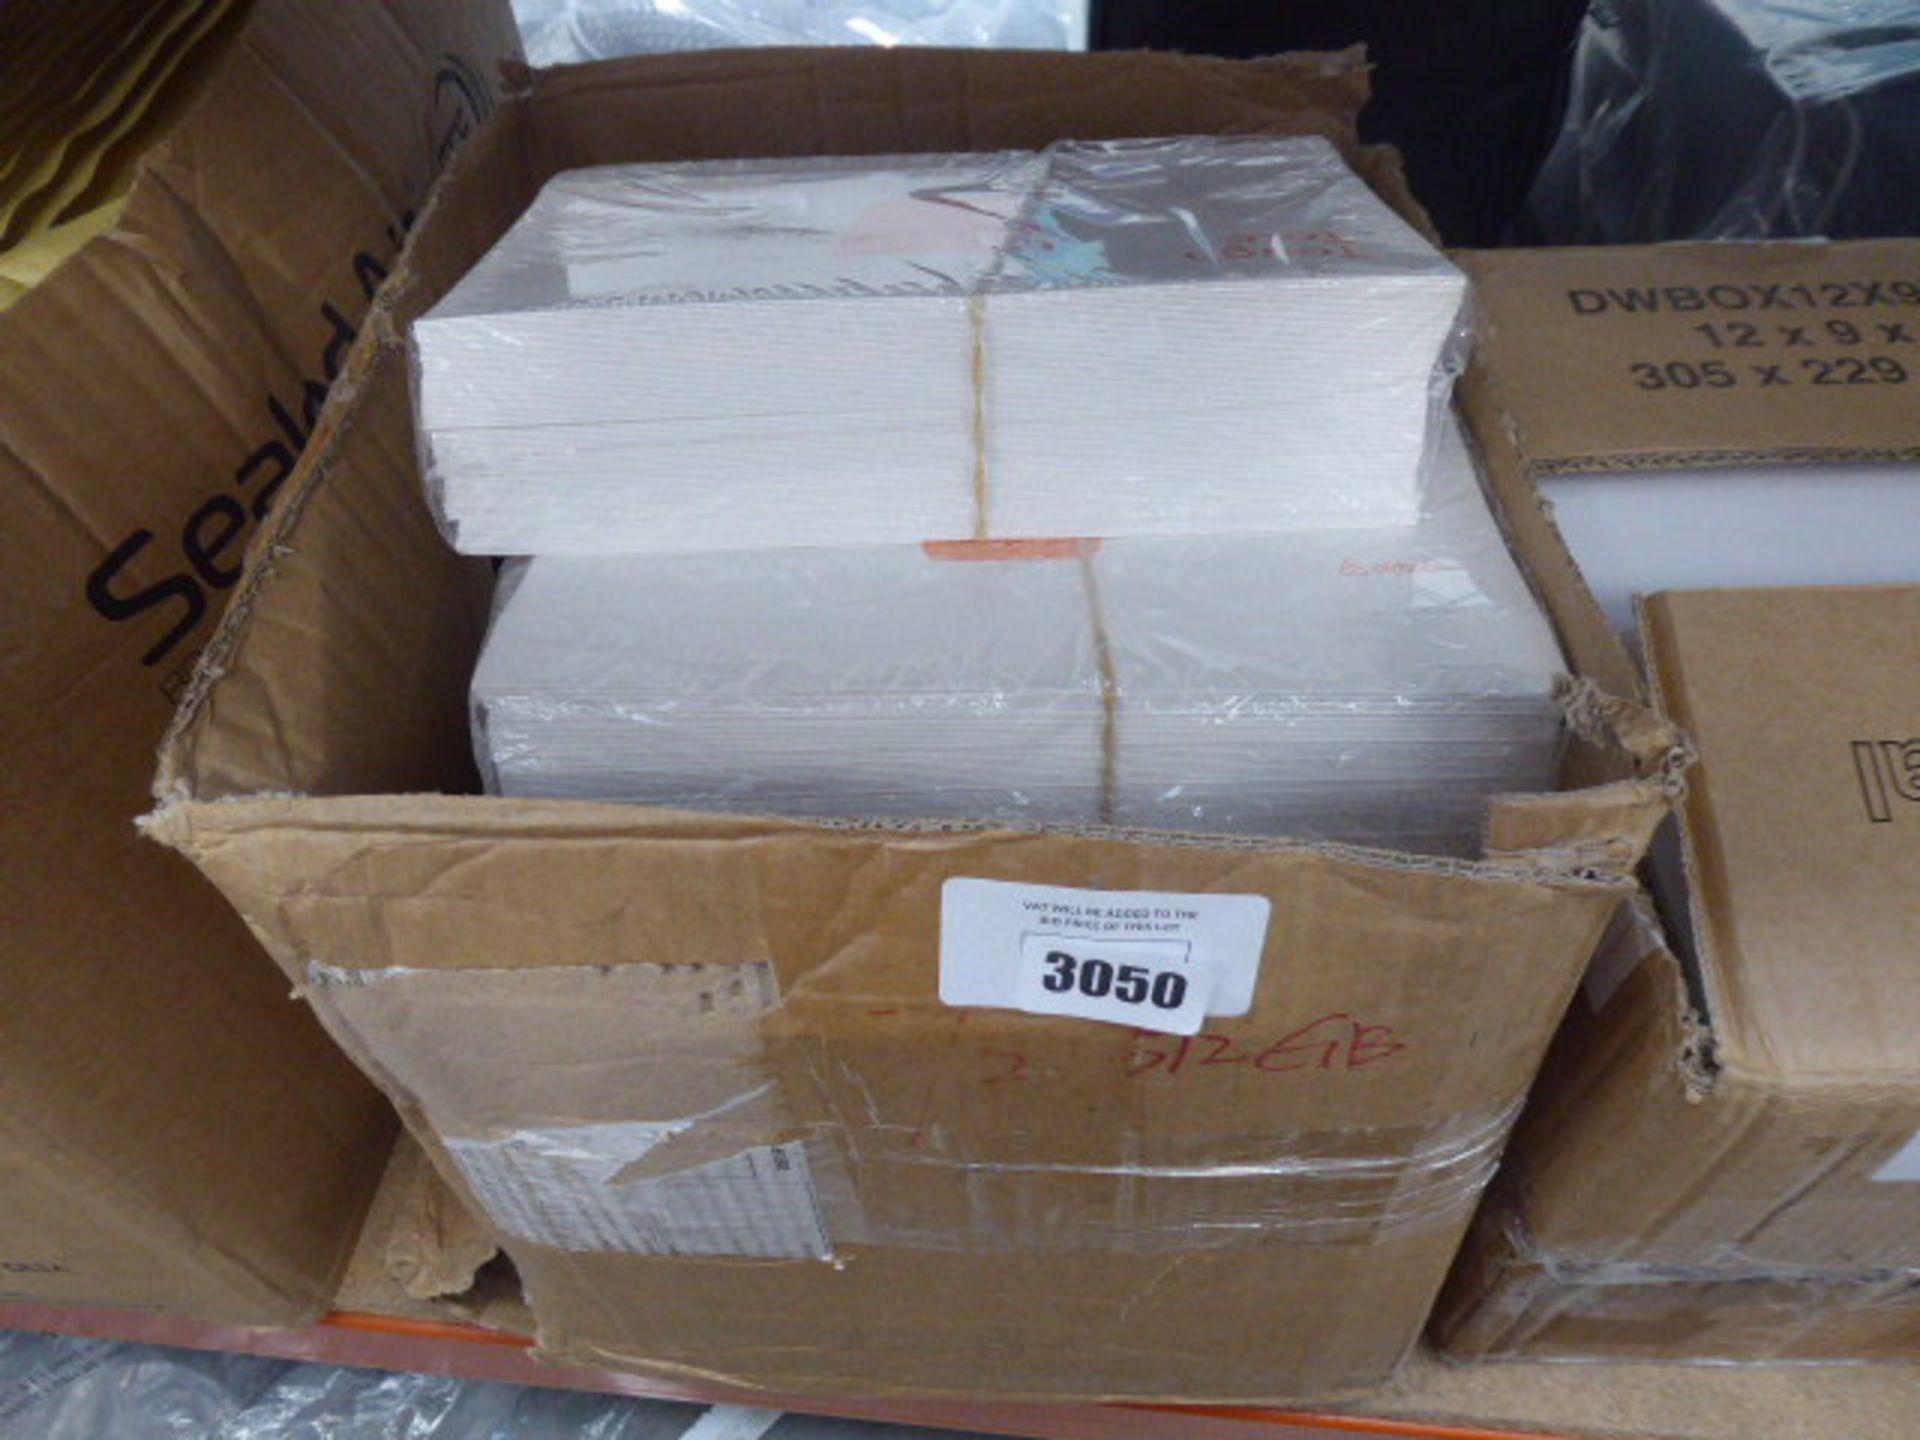 Box containing some tough tote envelopes